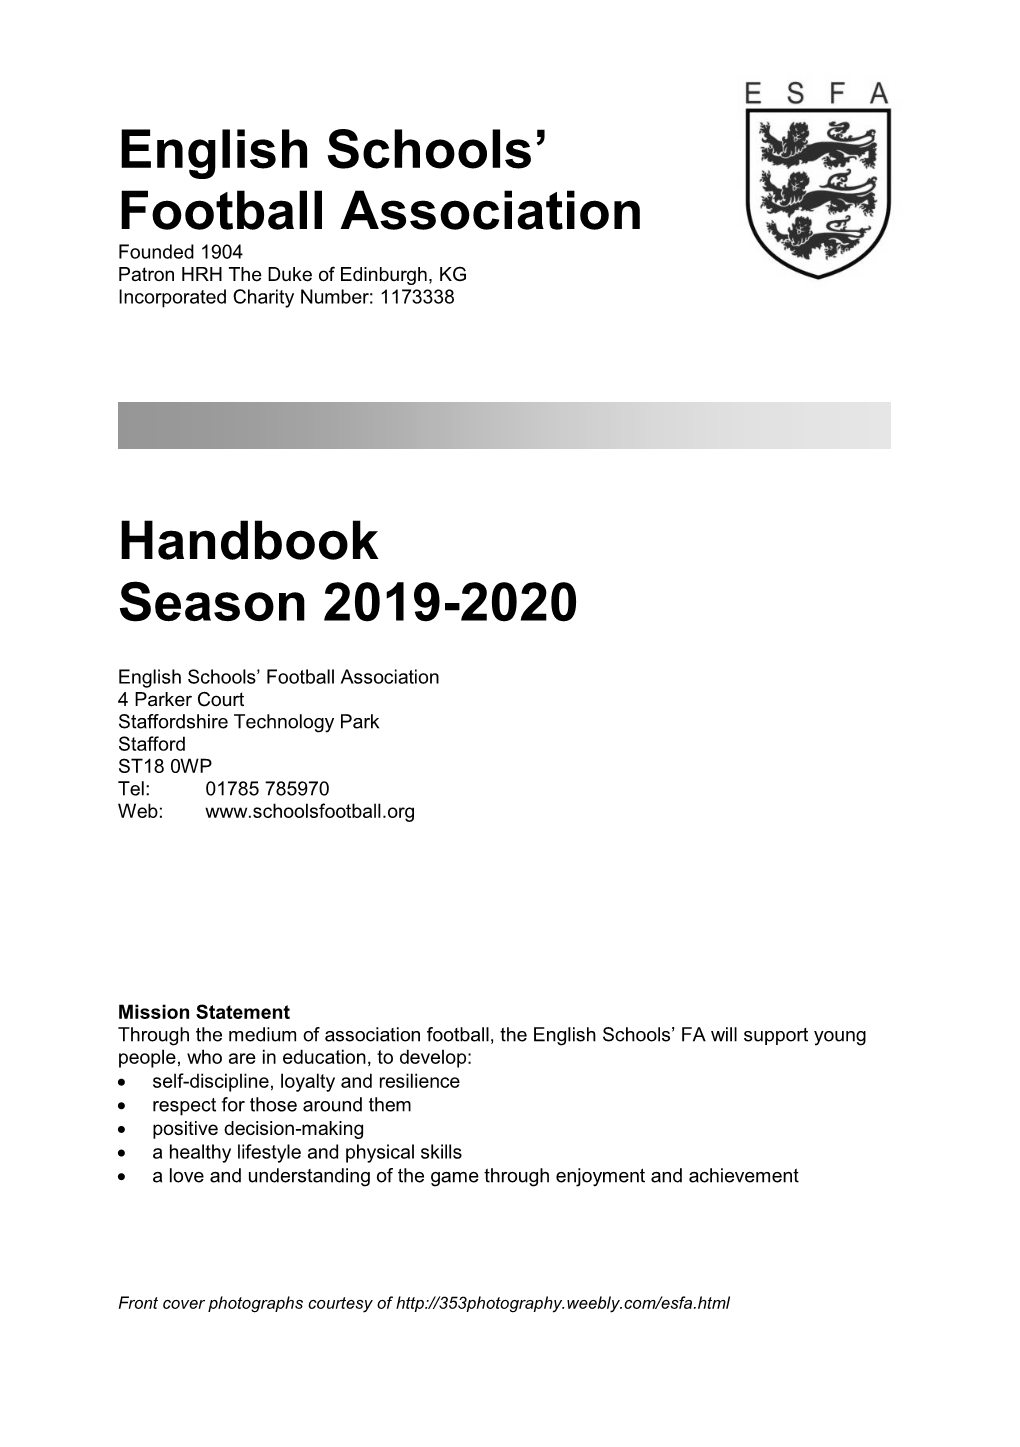 English Schools' Football Association Handbook Season 2019-2020